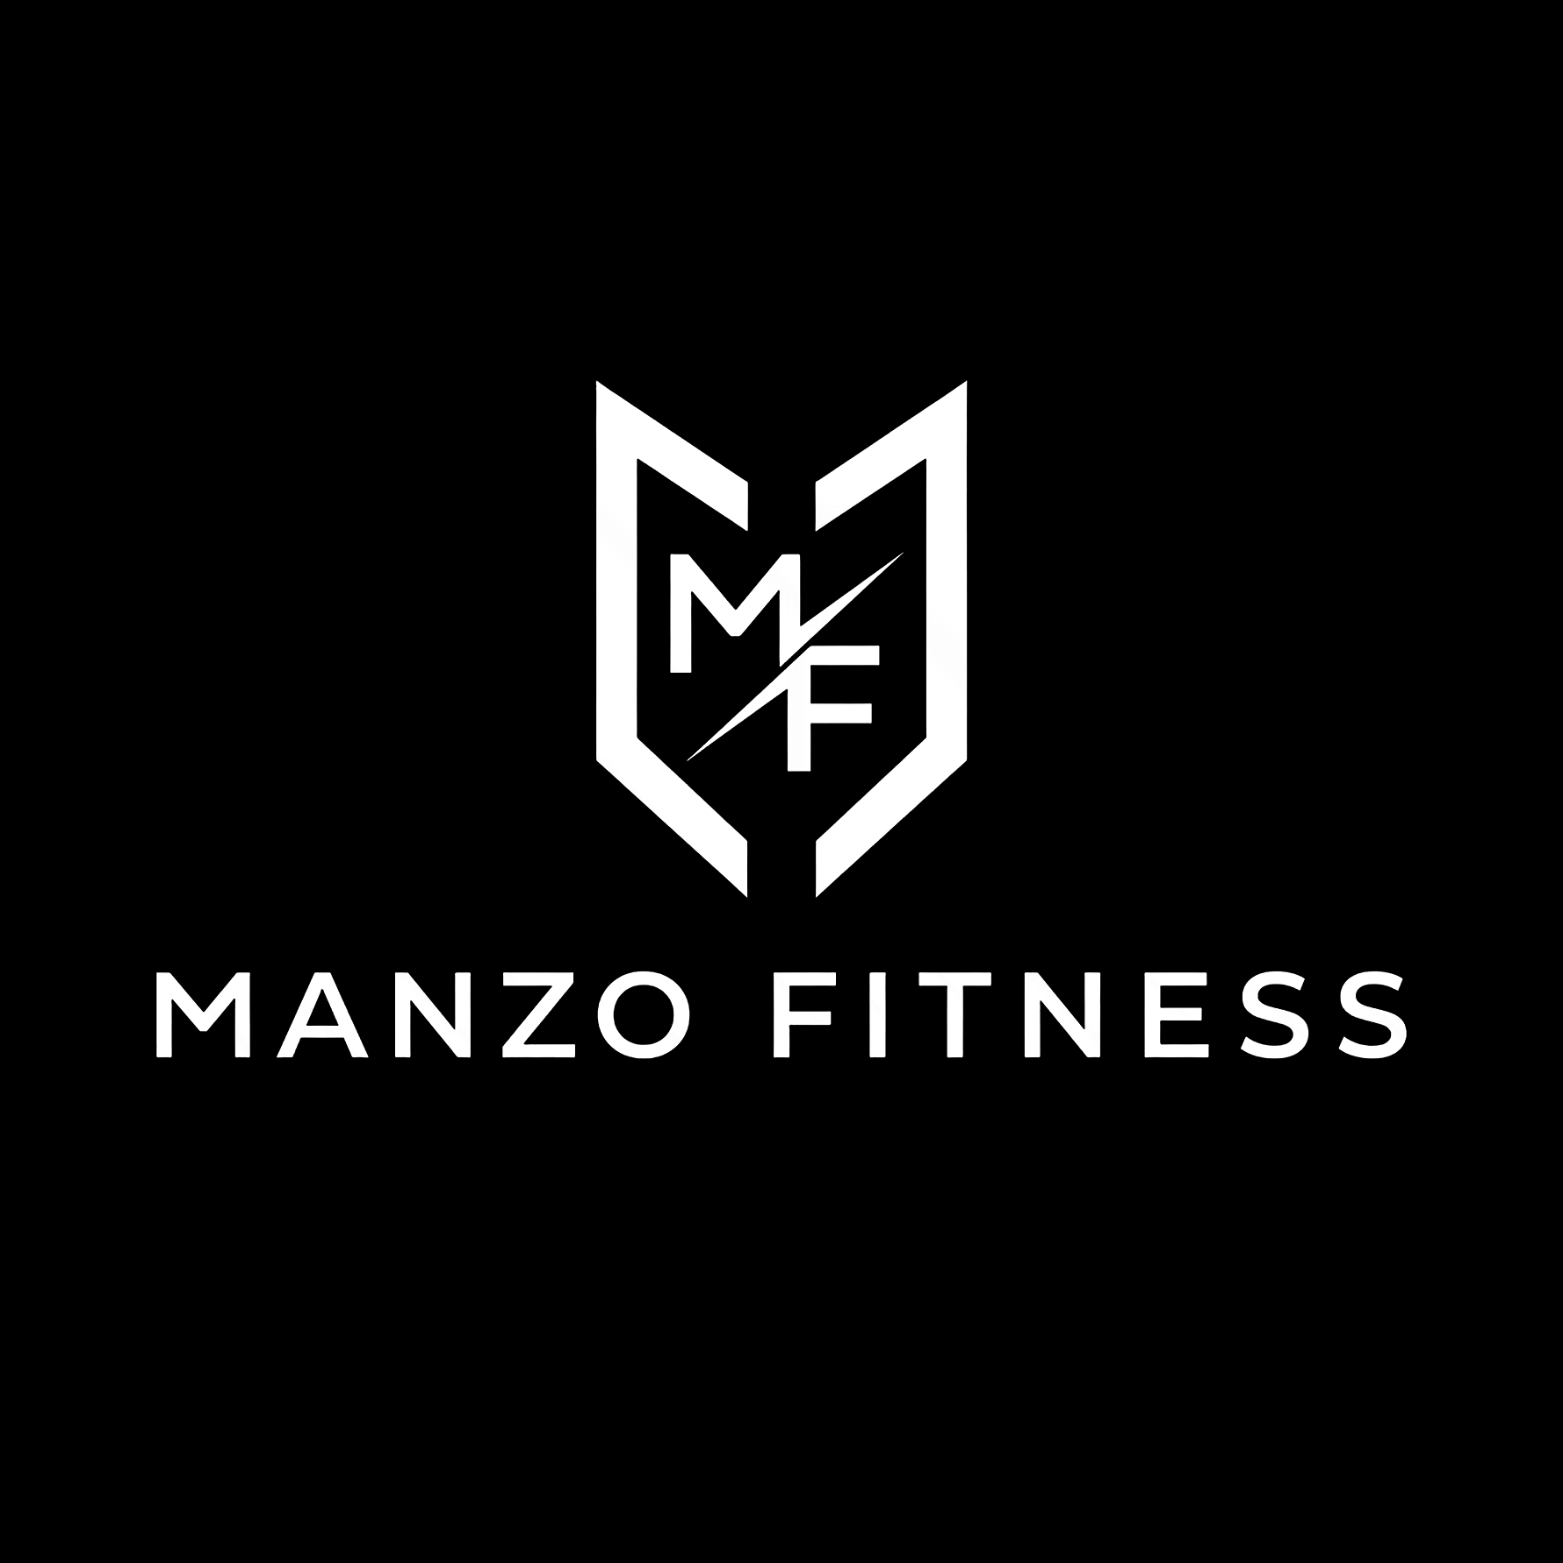 Manzo Fitness